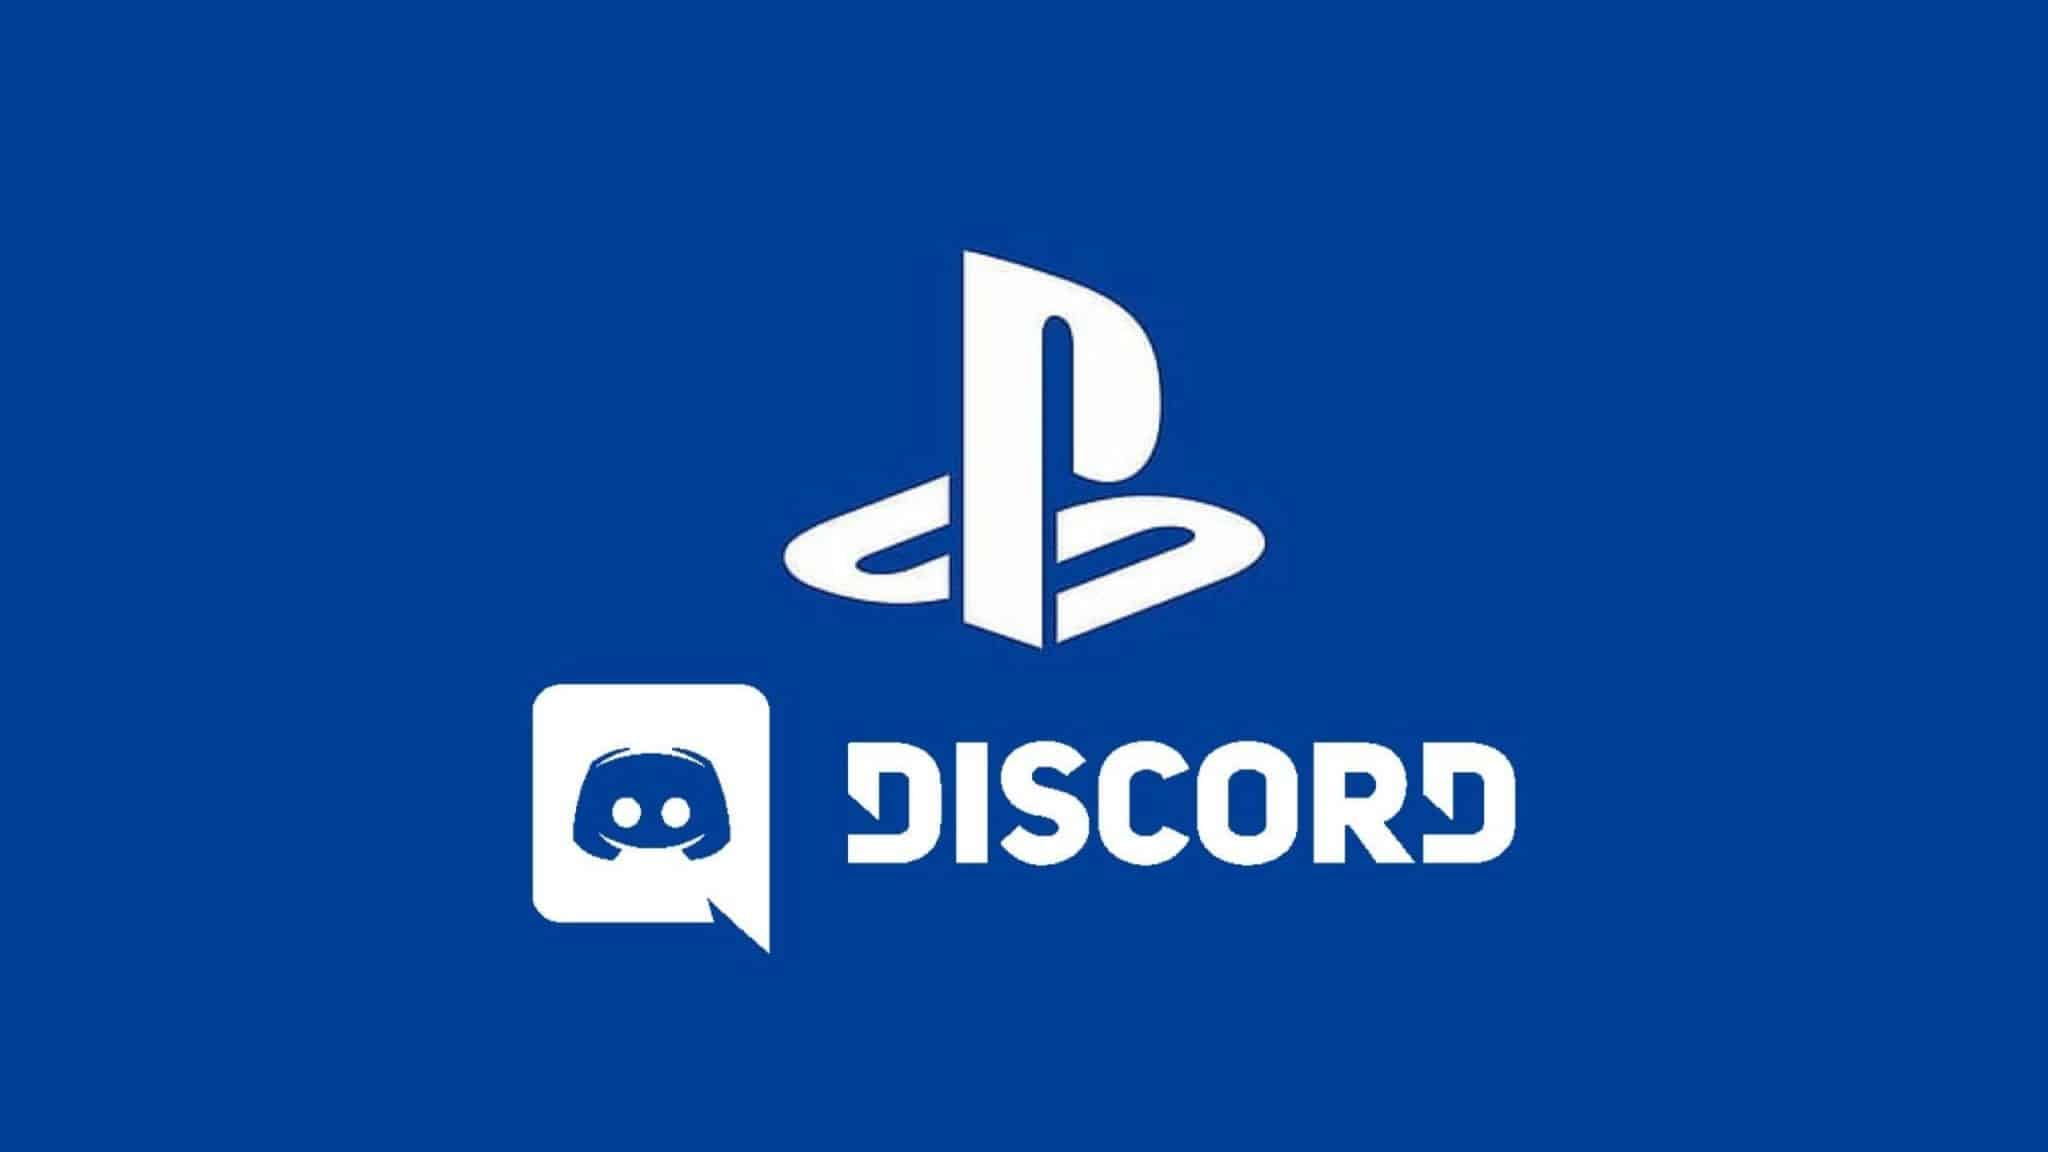 PlayStation Discord